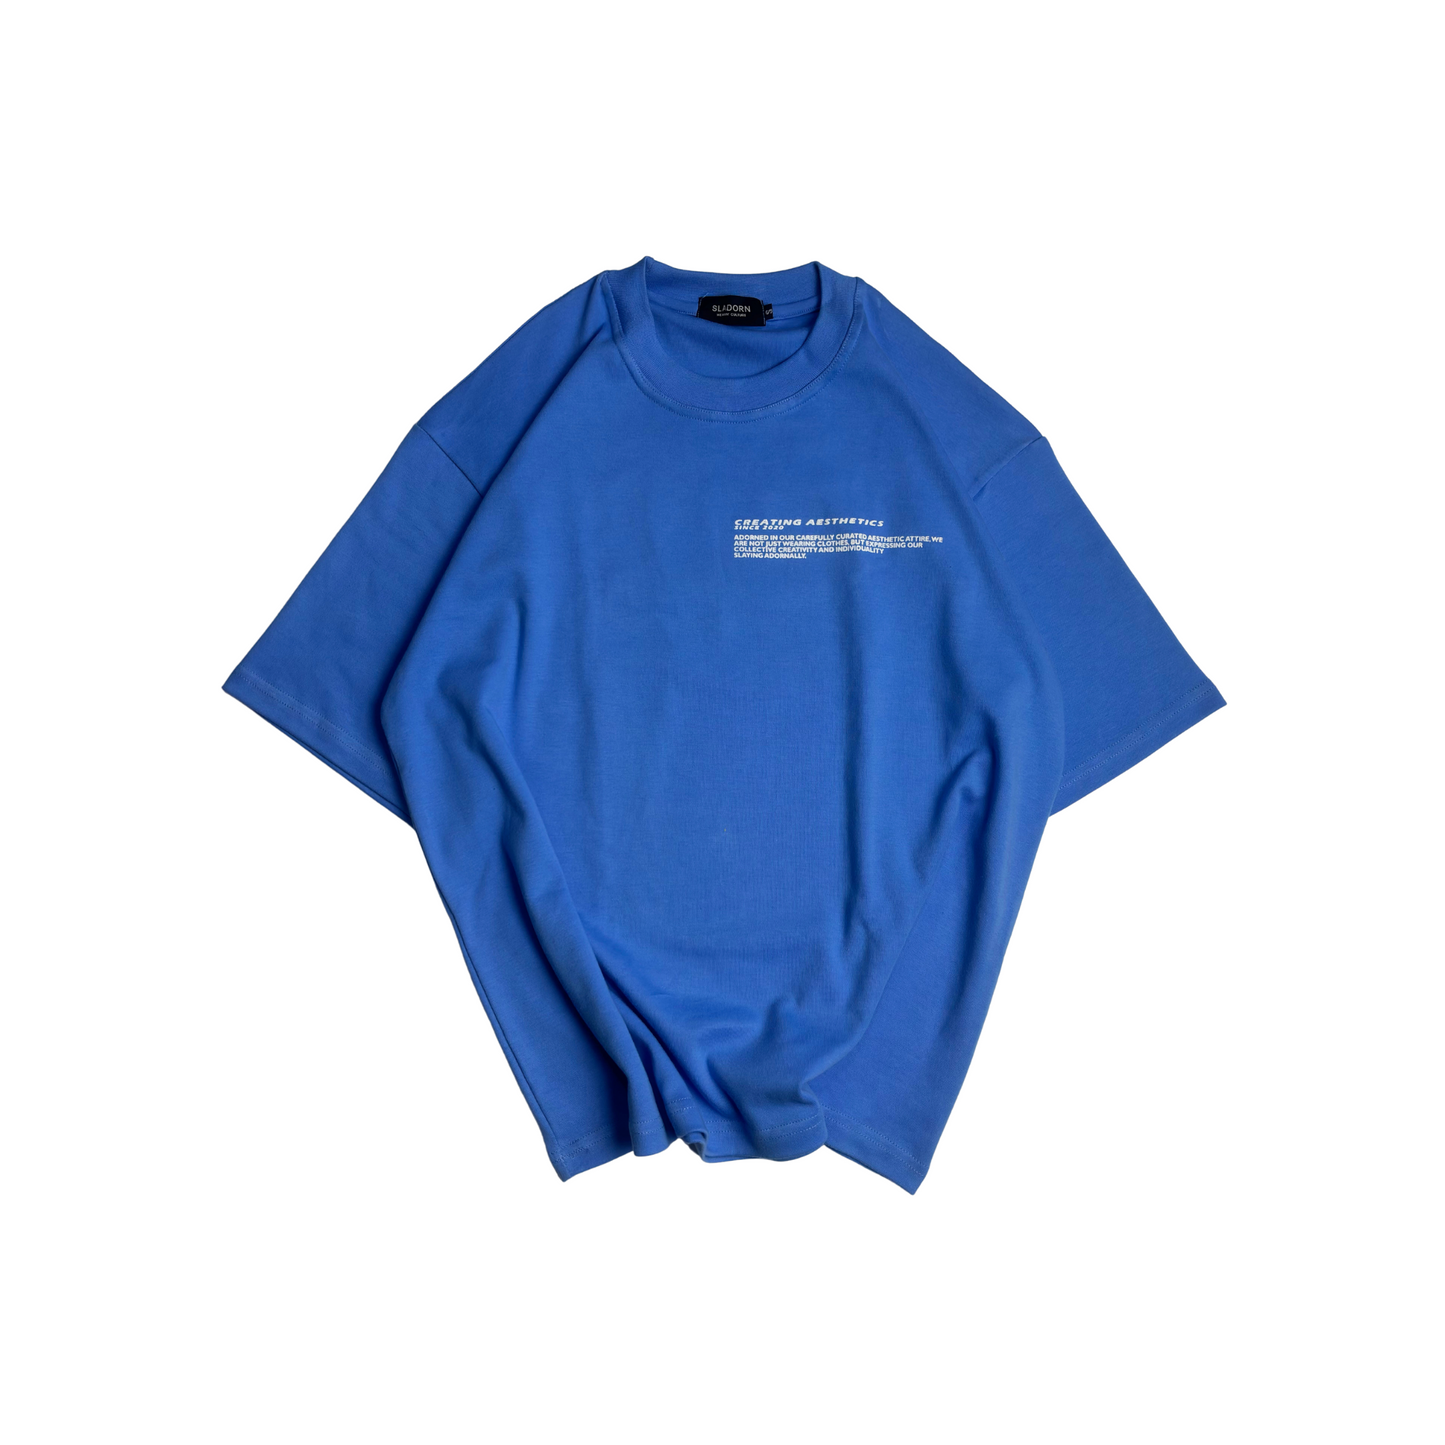 Signature x Blue - Tshirt (250GSM)